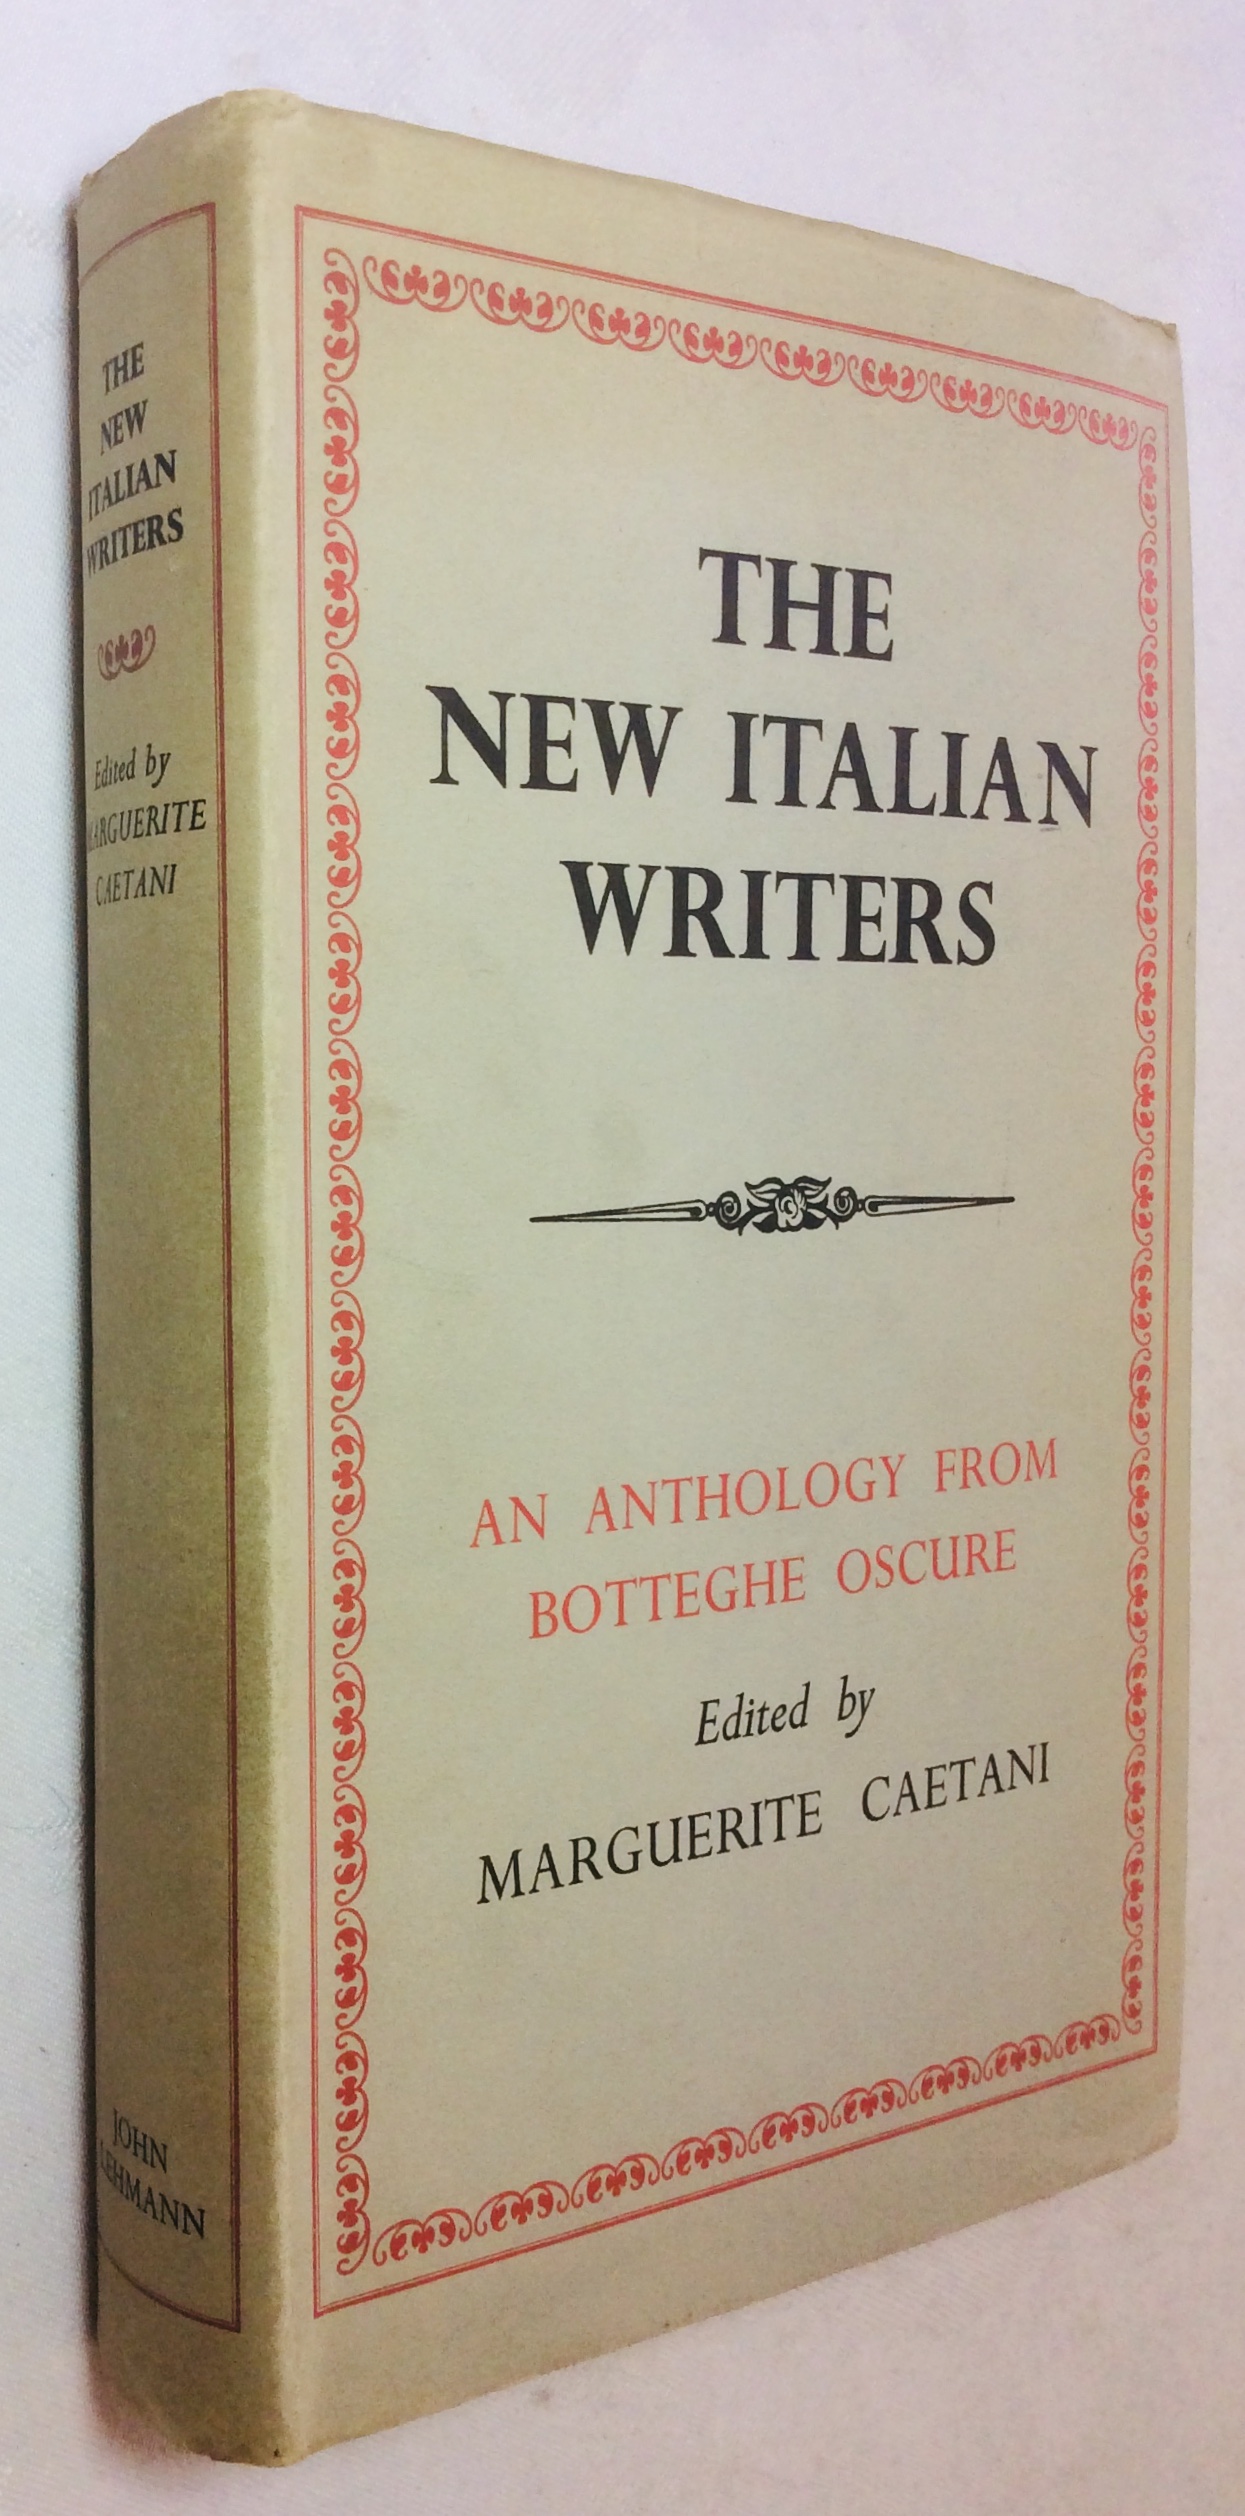 The New Italian Writers (London: John Lehmann, 1951)